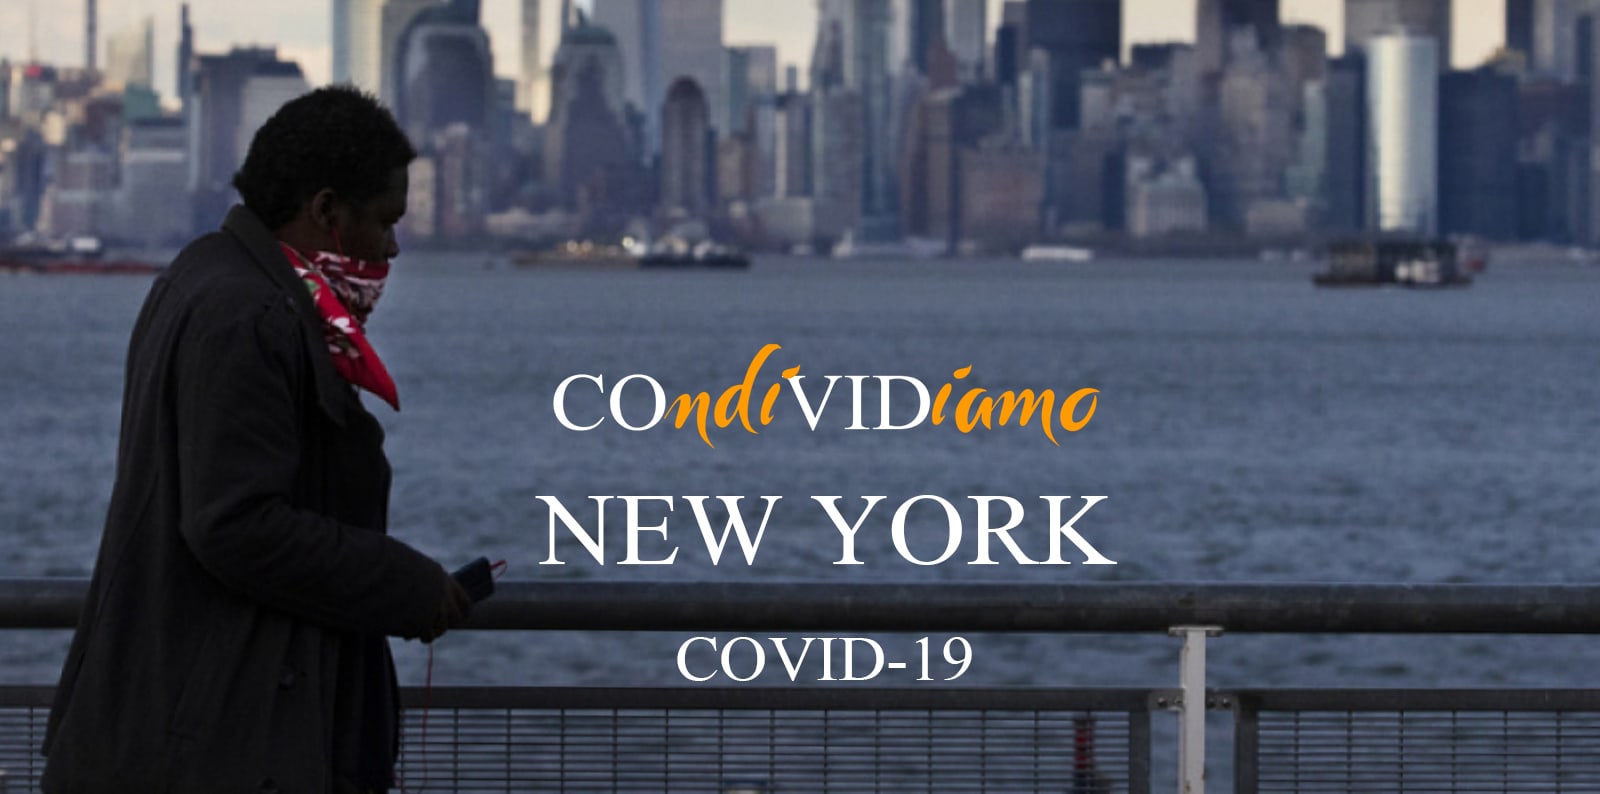 NEW YORK - COVID19